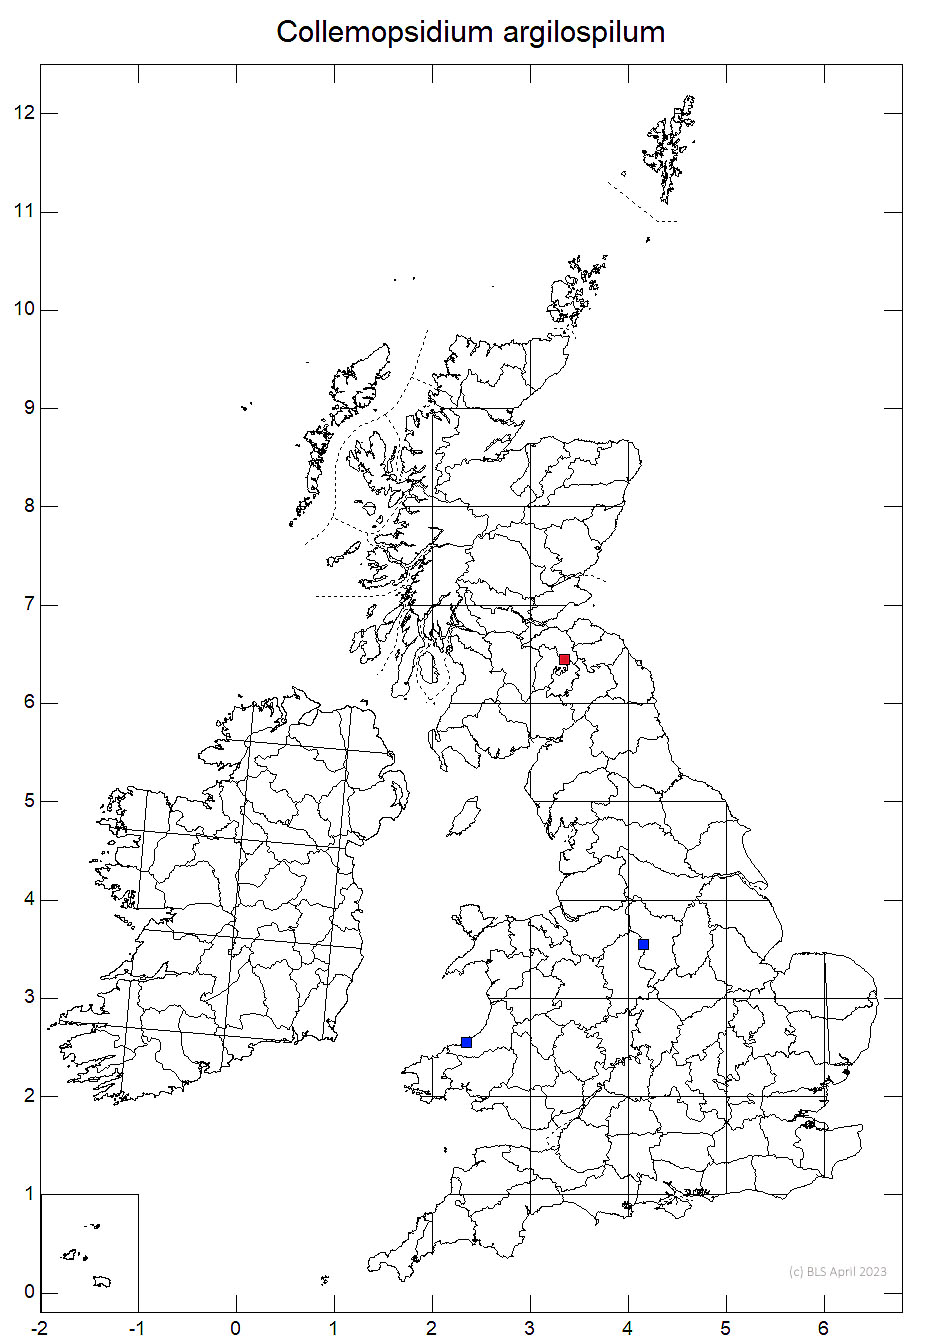 Collemopsidium argilospilum 10km sq distribution map